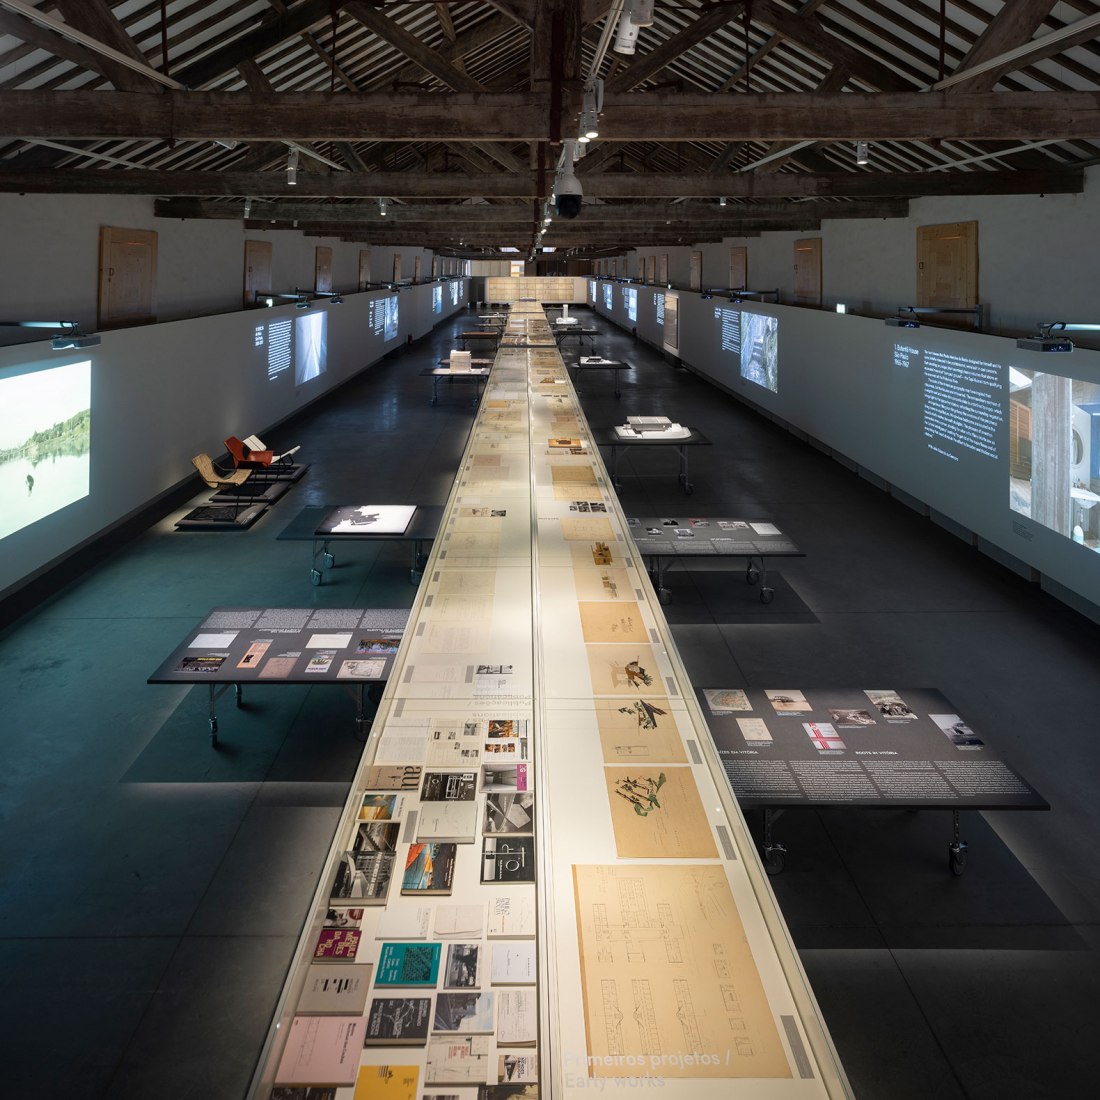 Paulo Mendes da Rocha: a tribute, a collection, two exhibitions